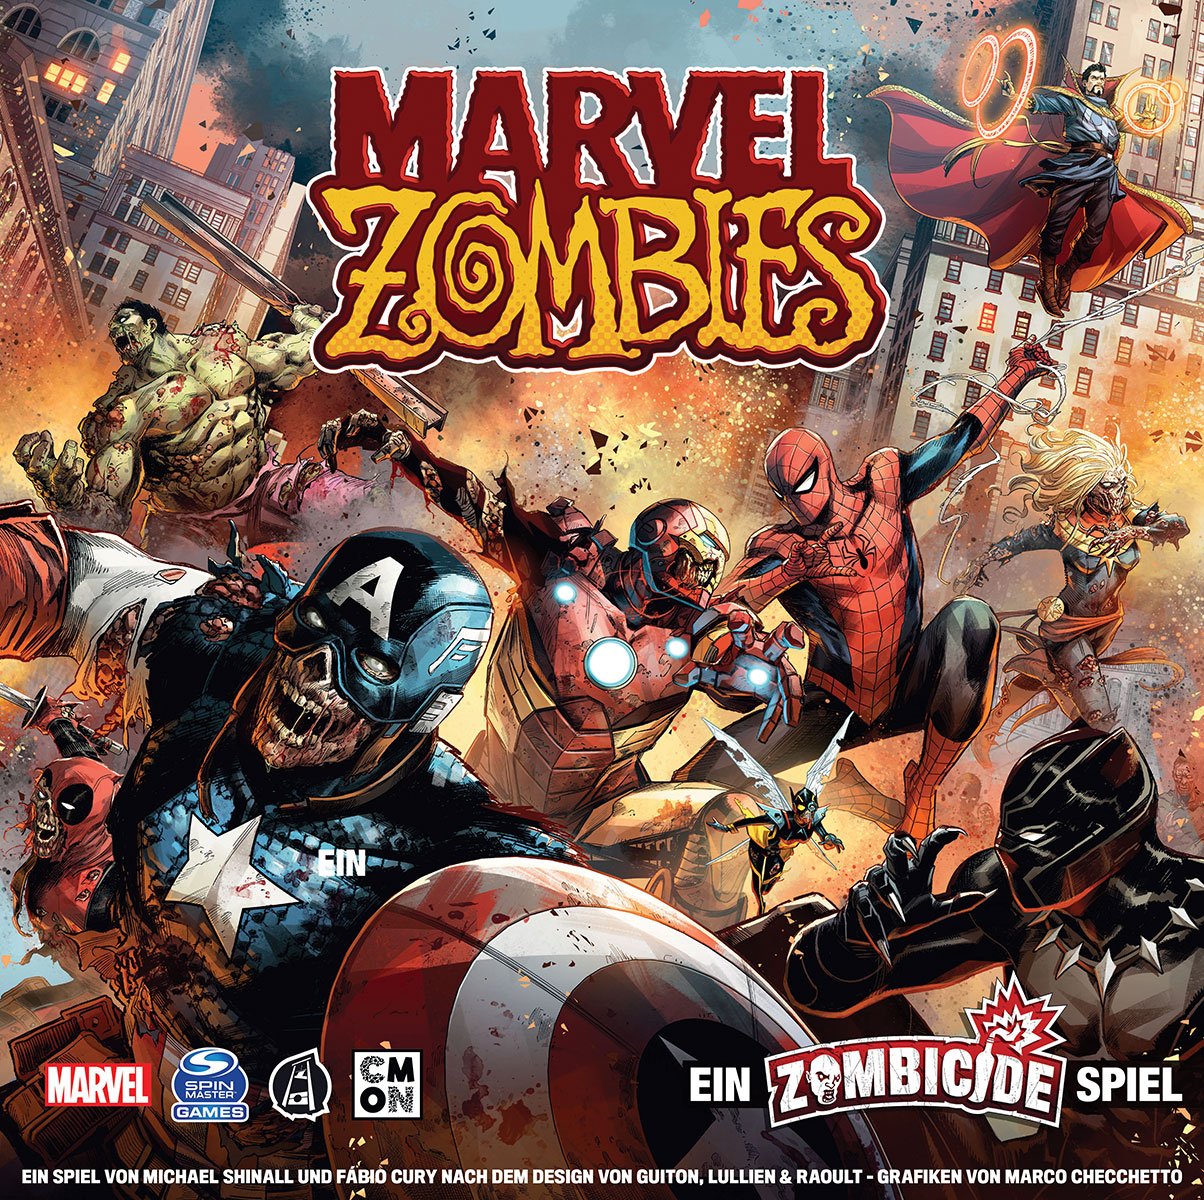 CMON Zombies Spiel) Marvel Brettspiel (Ein Mehrfarbig Zombicide